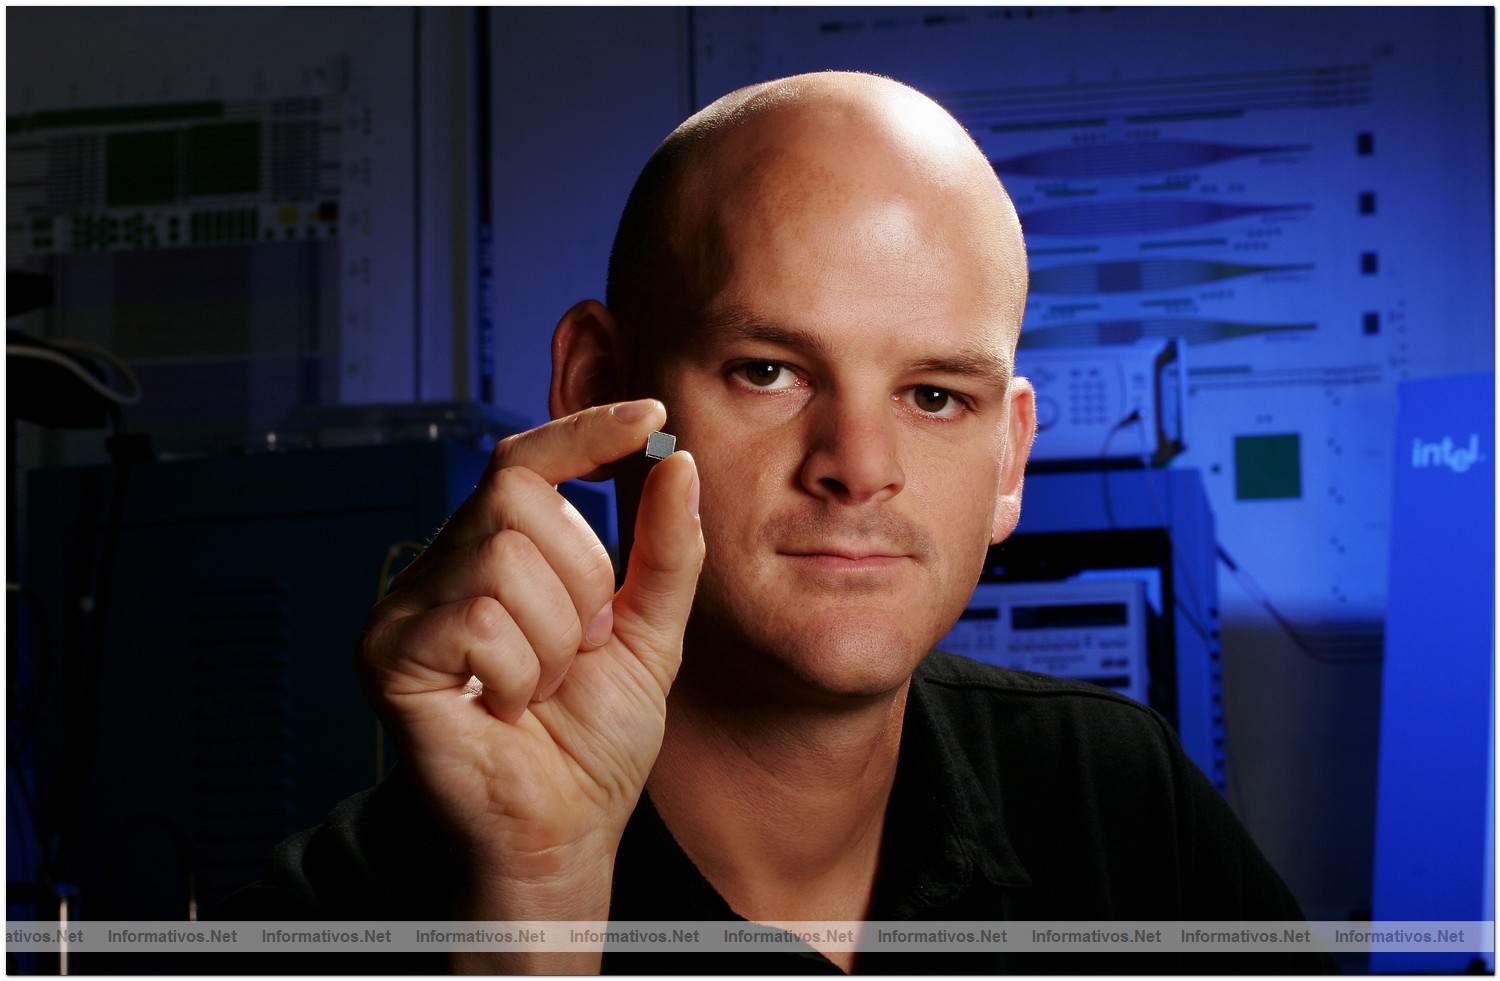 Intel Researcher Richard Jones holds a Hybrid Silicon Laser chip